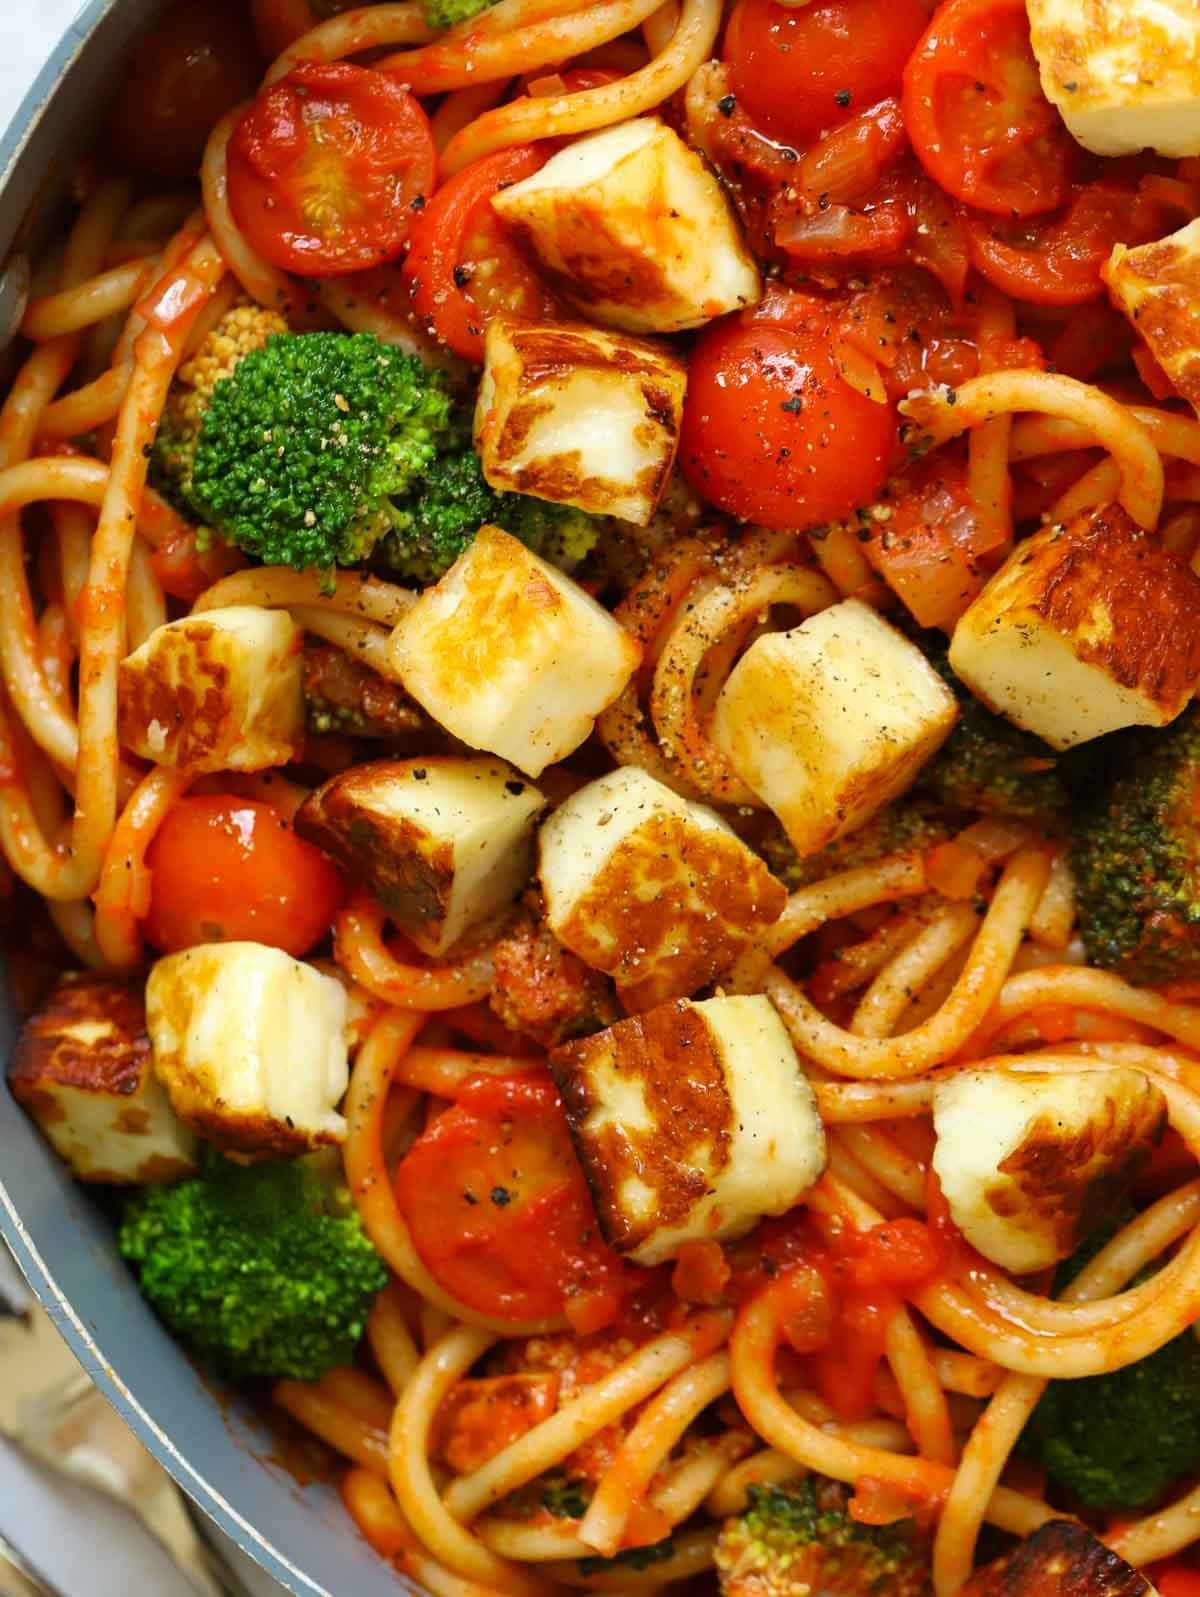 A close up of halloumi chunks with spaghetti and broccoli in a tomato sauce.